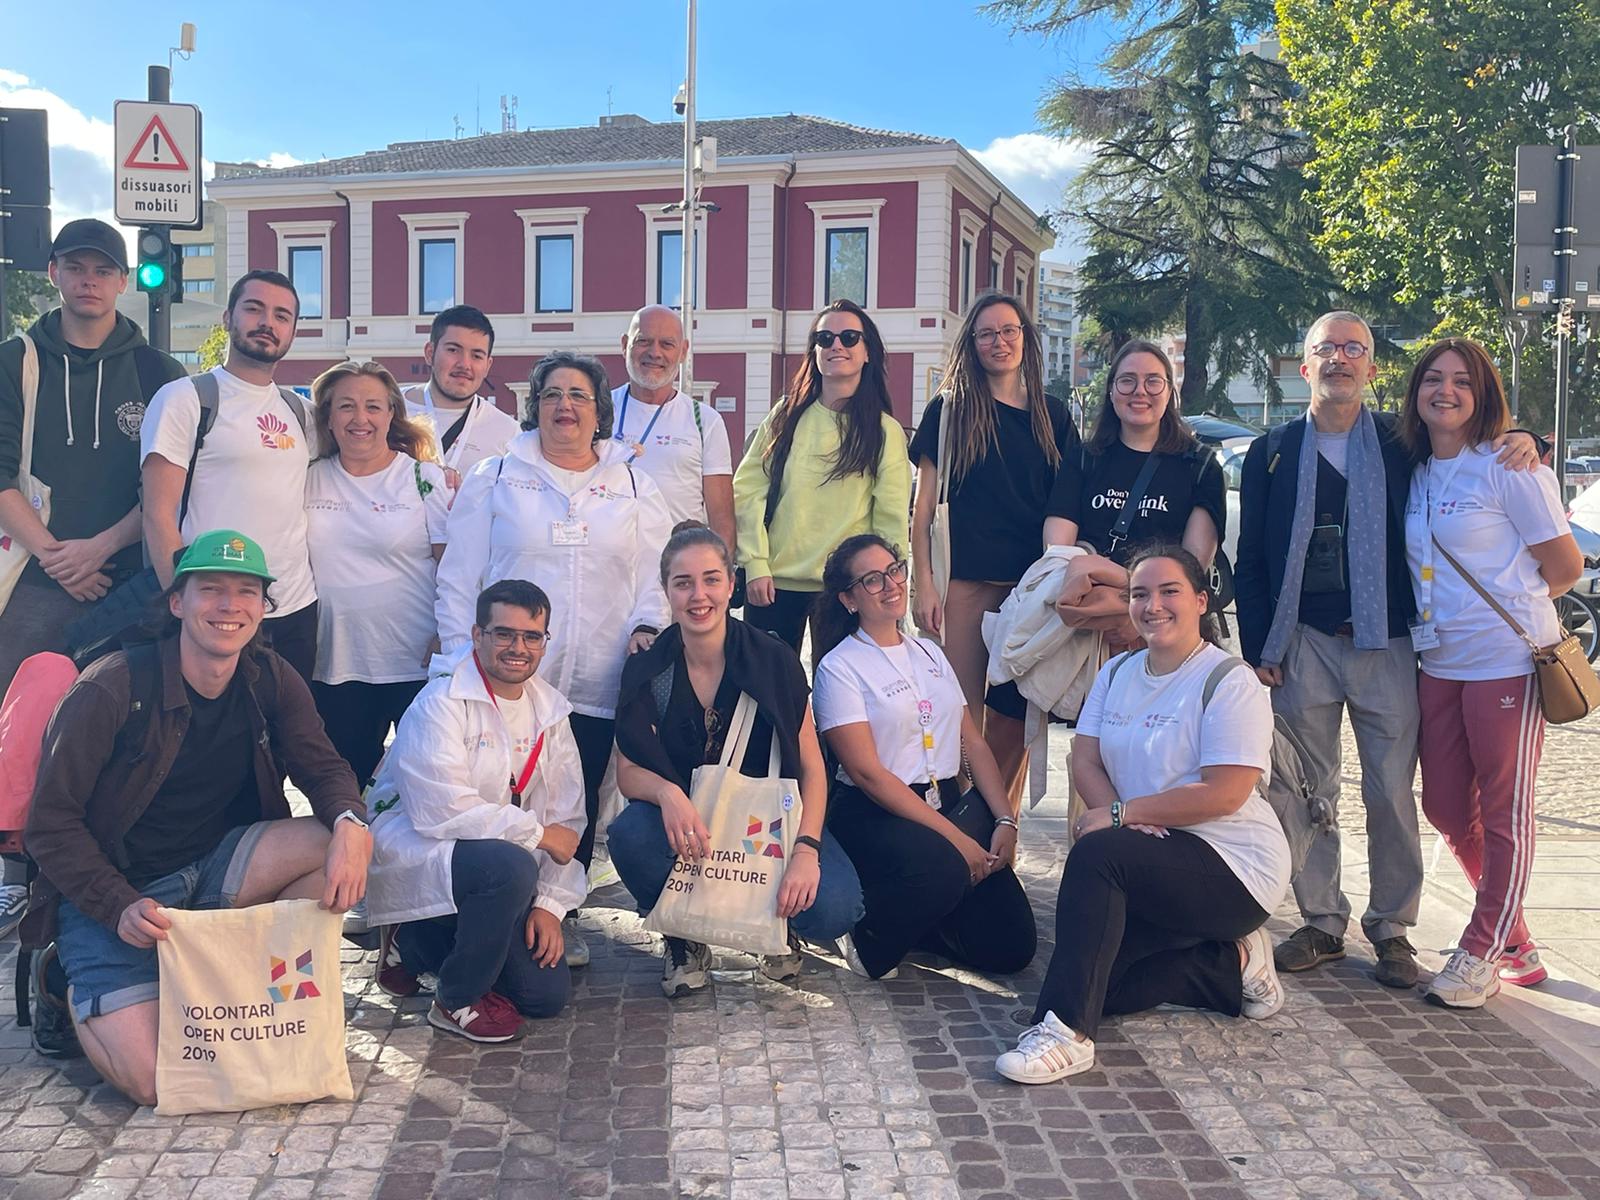 Matera 2019, delegazione di Kaunas 2022 in città per conoscere l’Associazione Volontari Open Culture 2019